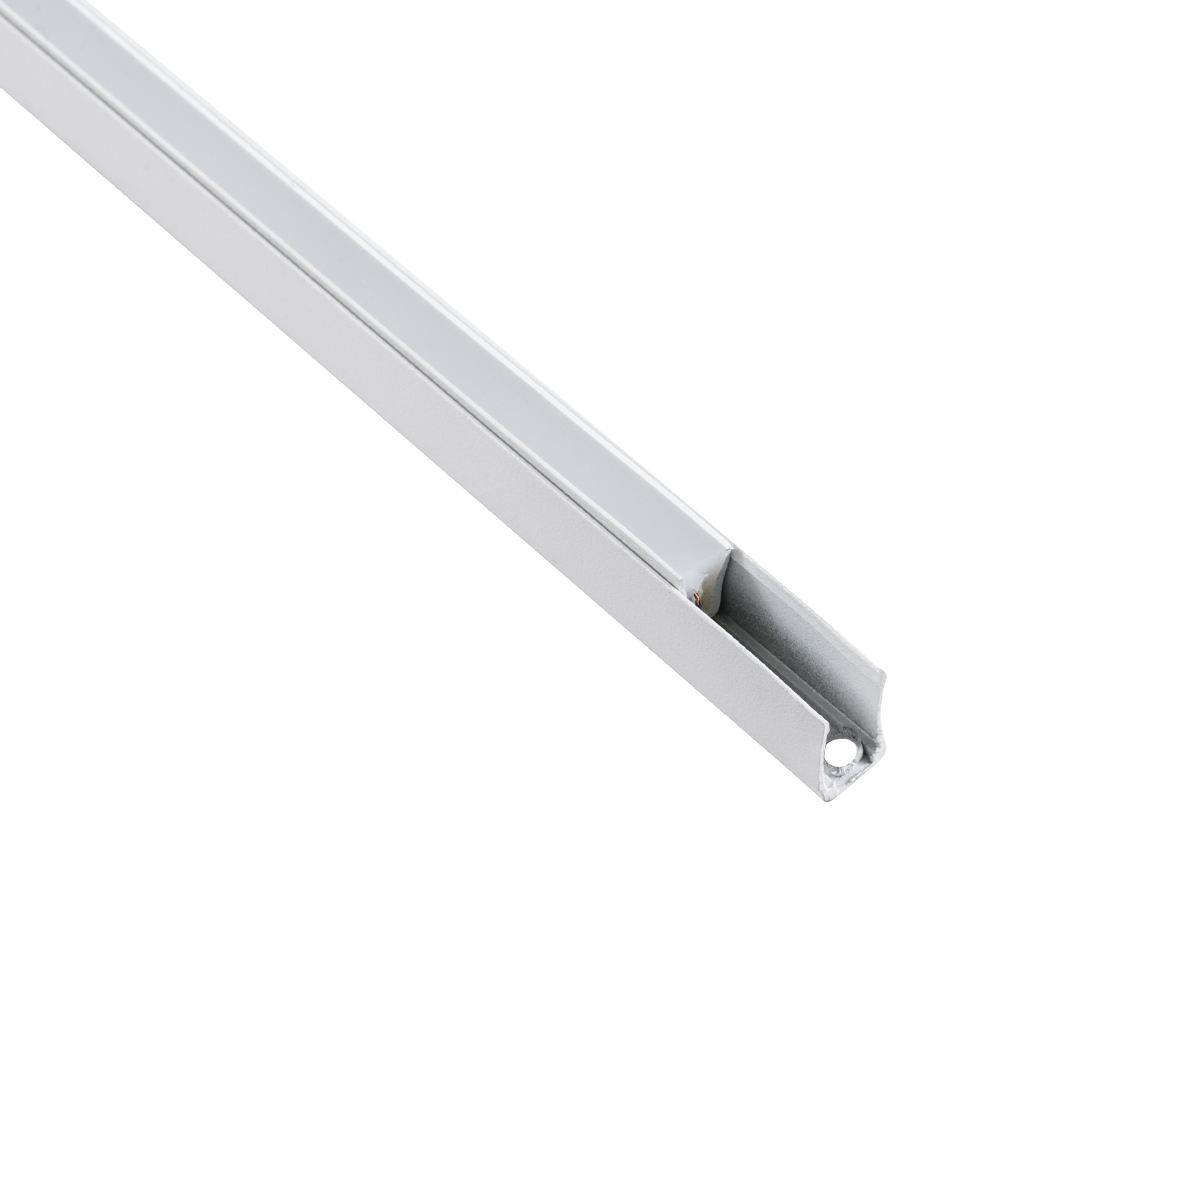 GloboStar® NEONPRO 61530 Προφίλ Αλουμινίου – Βάση Στήριξης για την NEONPRO Professional Neon Flex LED 10W/m 24VDC & 48VDC με Π6 x Υ1.2cm – Λευκό – Μ300 x Π0.8 x Υ1.3cm – Πακέτο 5 Τεμάχια των 3 Μέτρων